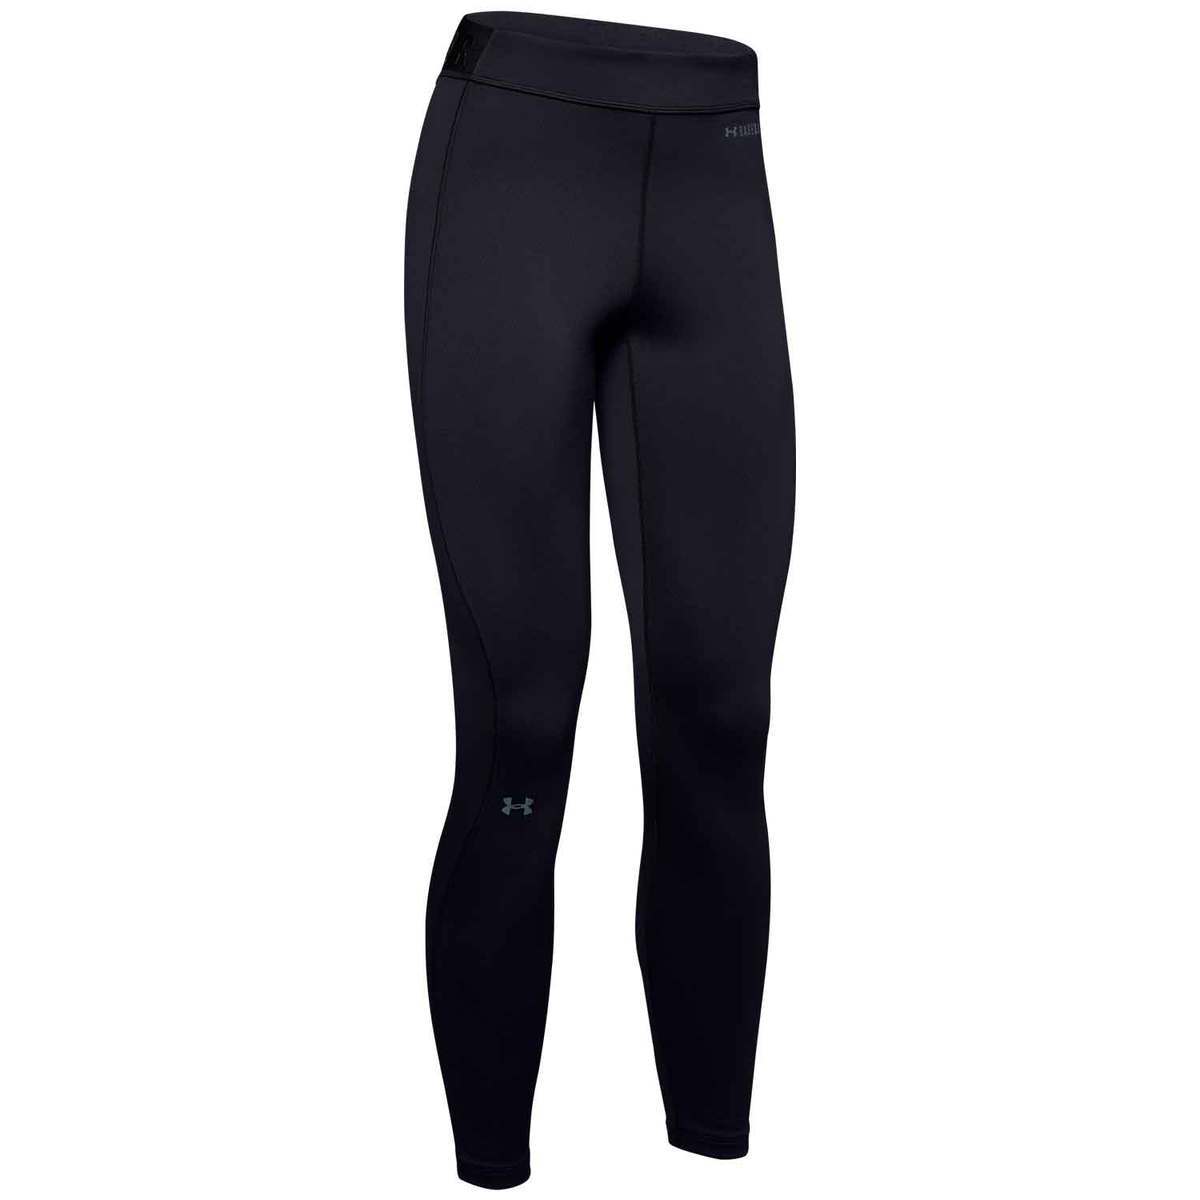 https://www.sportsmans.com/medias/under-armour-womens-coldgear-base-30-leggings-black-xs-1521669-1.jpg?context=bWFzdGVyfGltYWdlc3wyNDczMXxpbWFnZS9qcGVnfGltYWdlcy9oMzEvaDk3Lzk3MzE5Mjg5NDg3NjYuanBnfDU3ZmZmNjgwMDY4YzU2YzMxN2U1YTEzMTM0YzE3NGI4ZThmYzAzNmQ0OTZhMjYzYTYyNDU3ZWUyMDQ0Njg2YTg